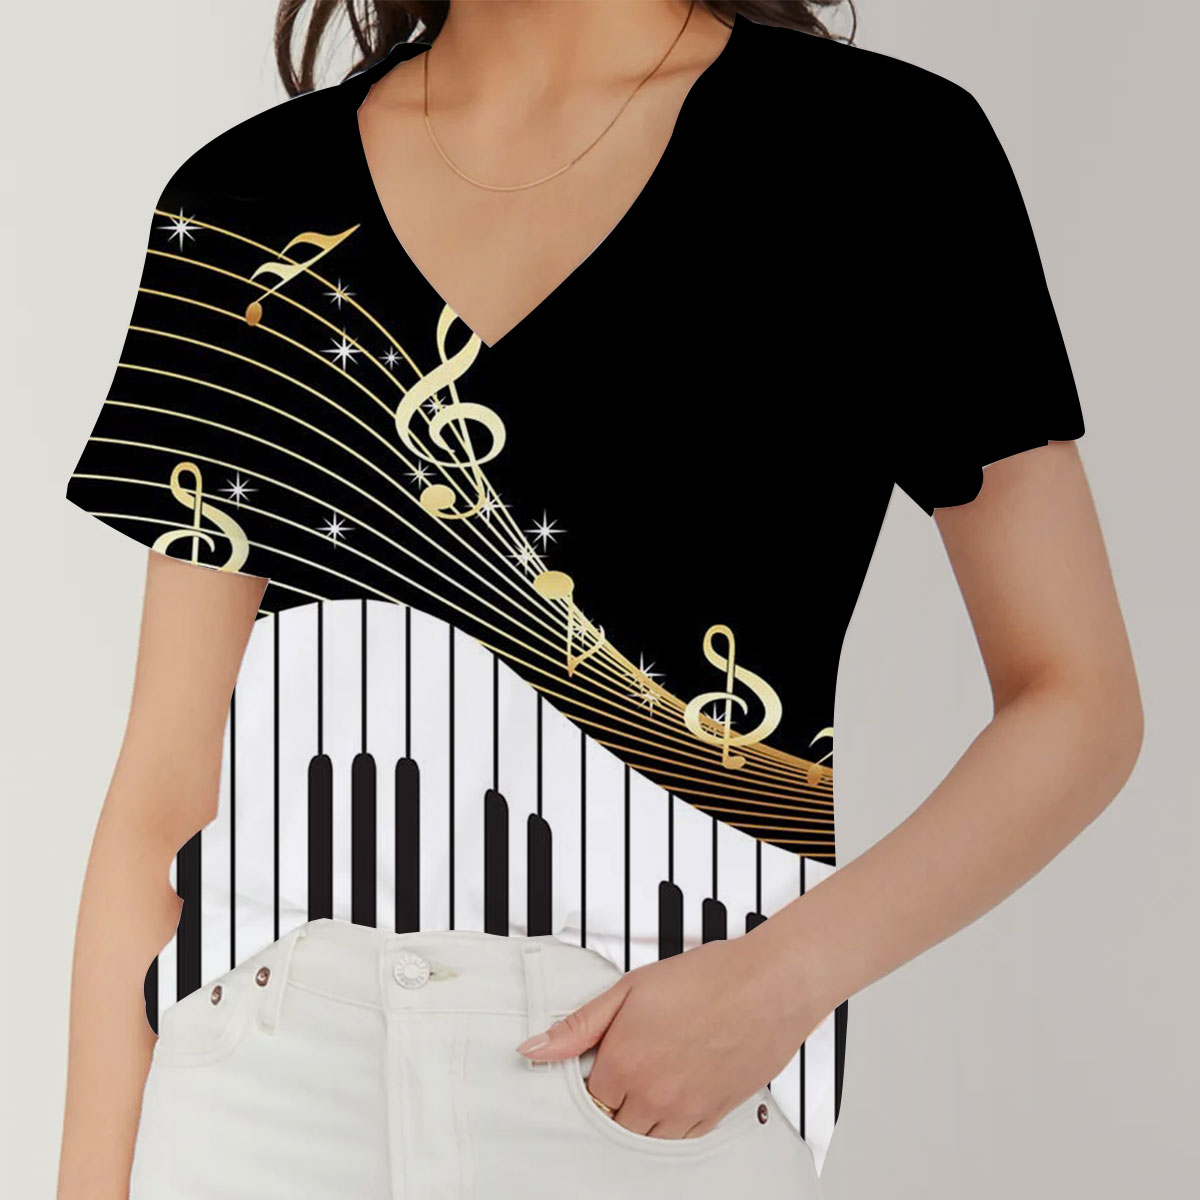 Classic Piano V-Neck Women's T-Shirt